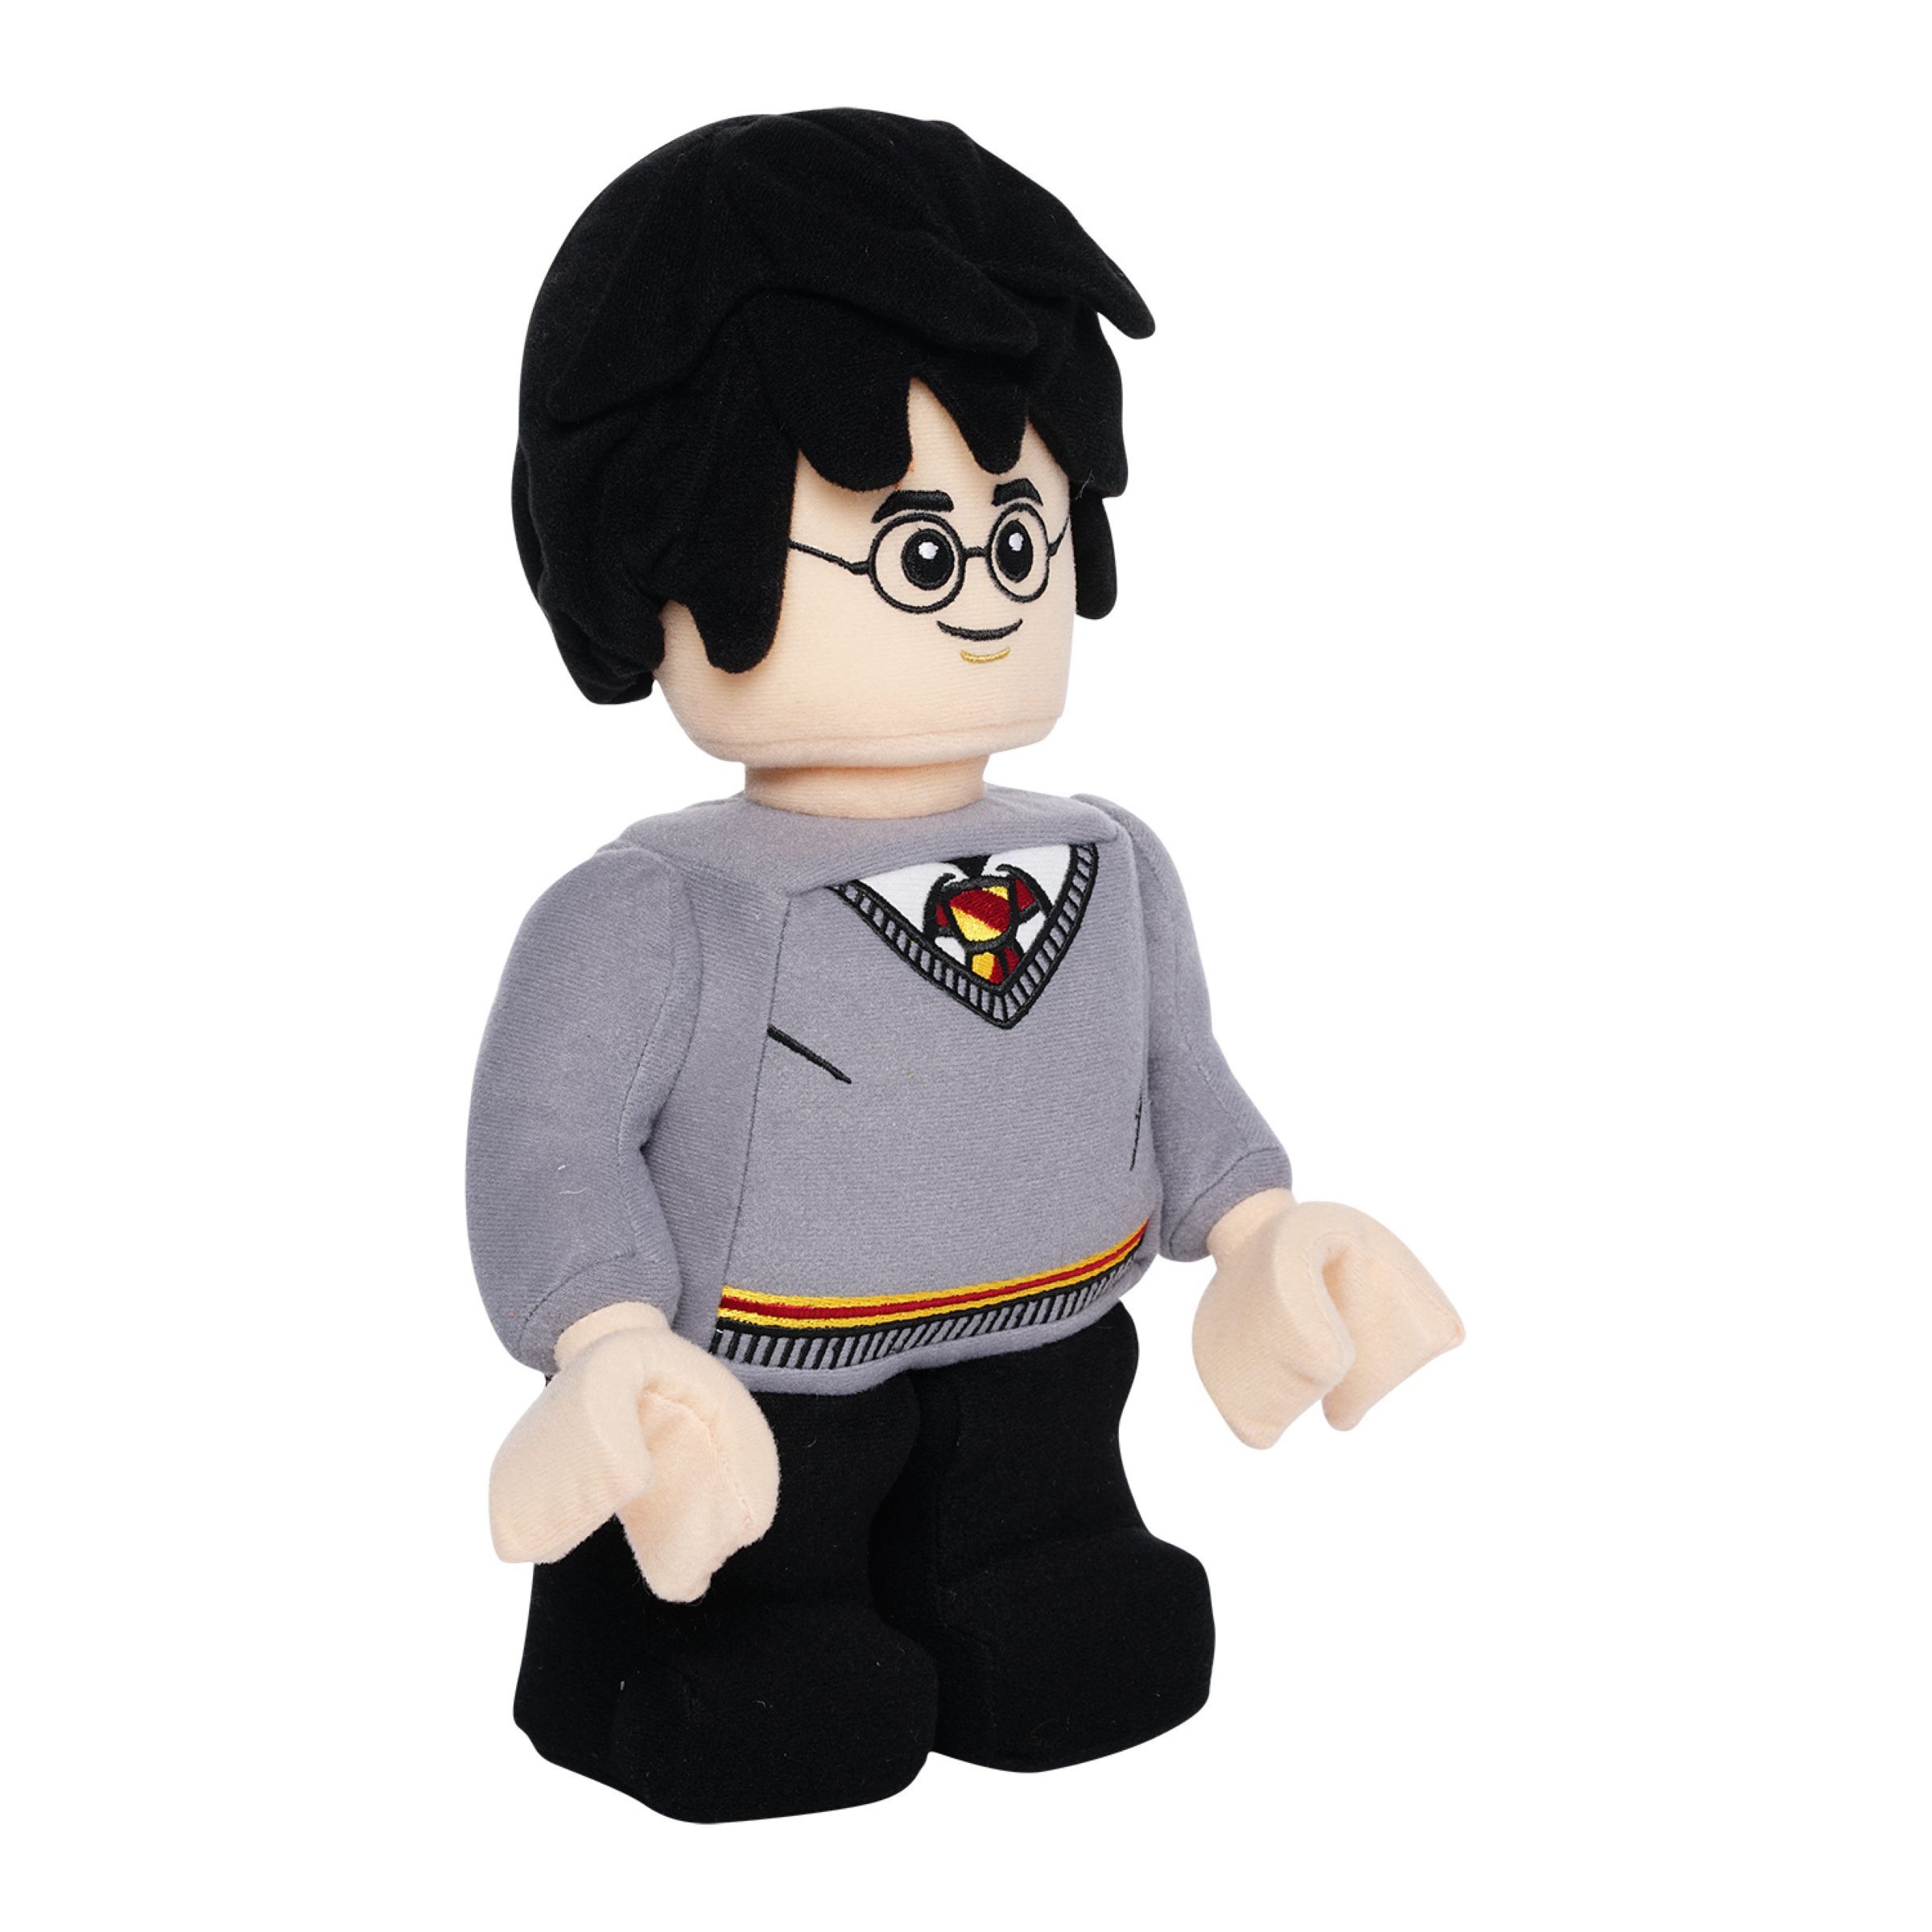 LEGO Gear 5007455 Harry Potter™ Plüschfigur LEGO_5007455_alt2.jpg